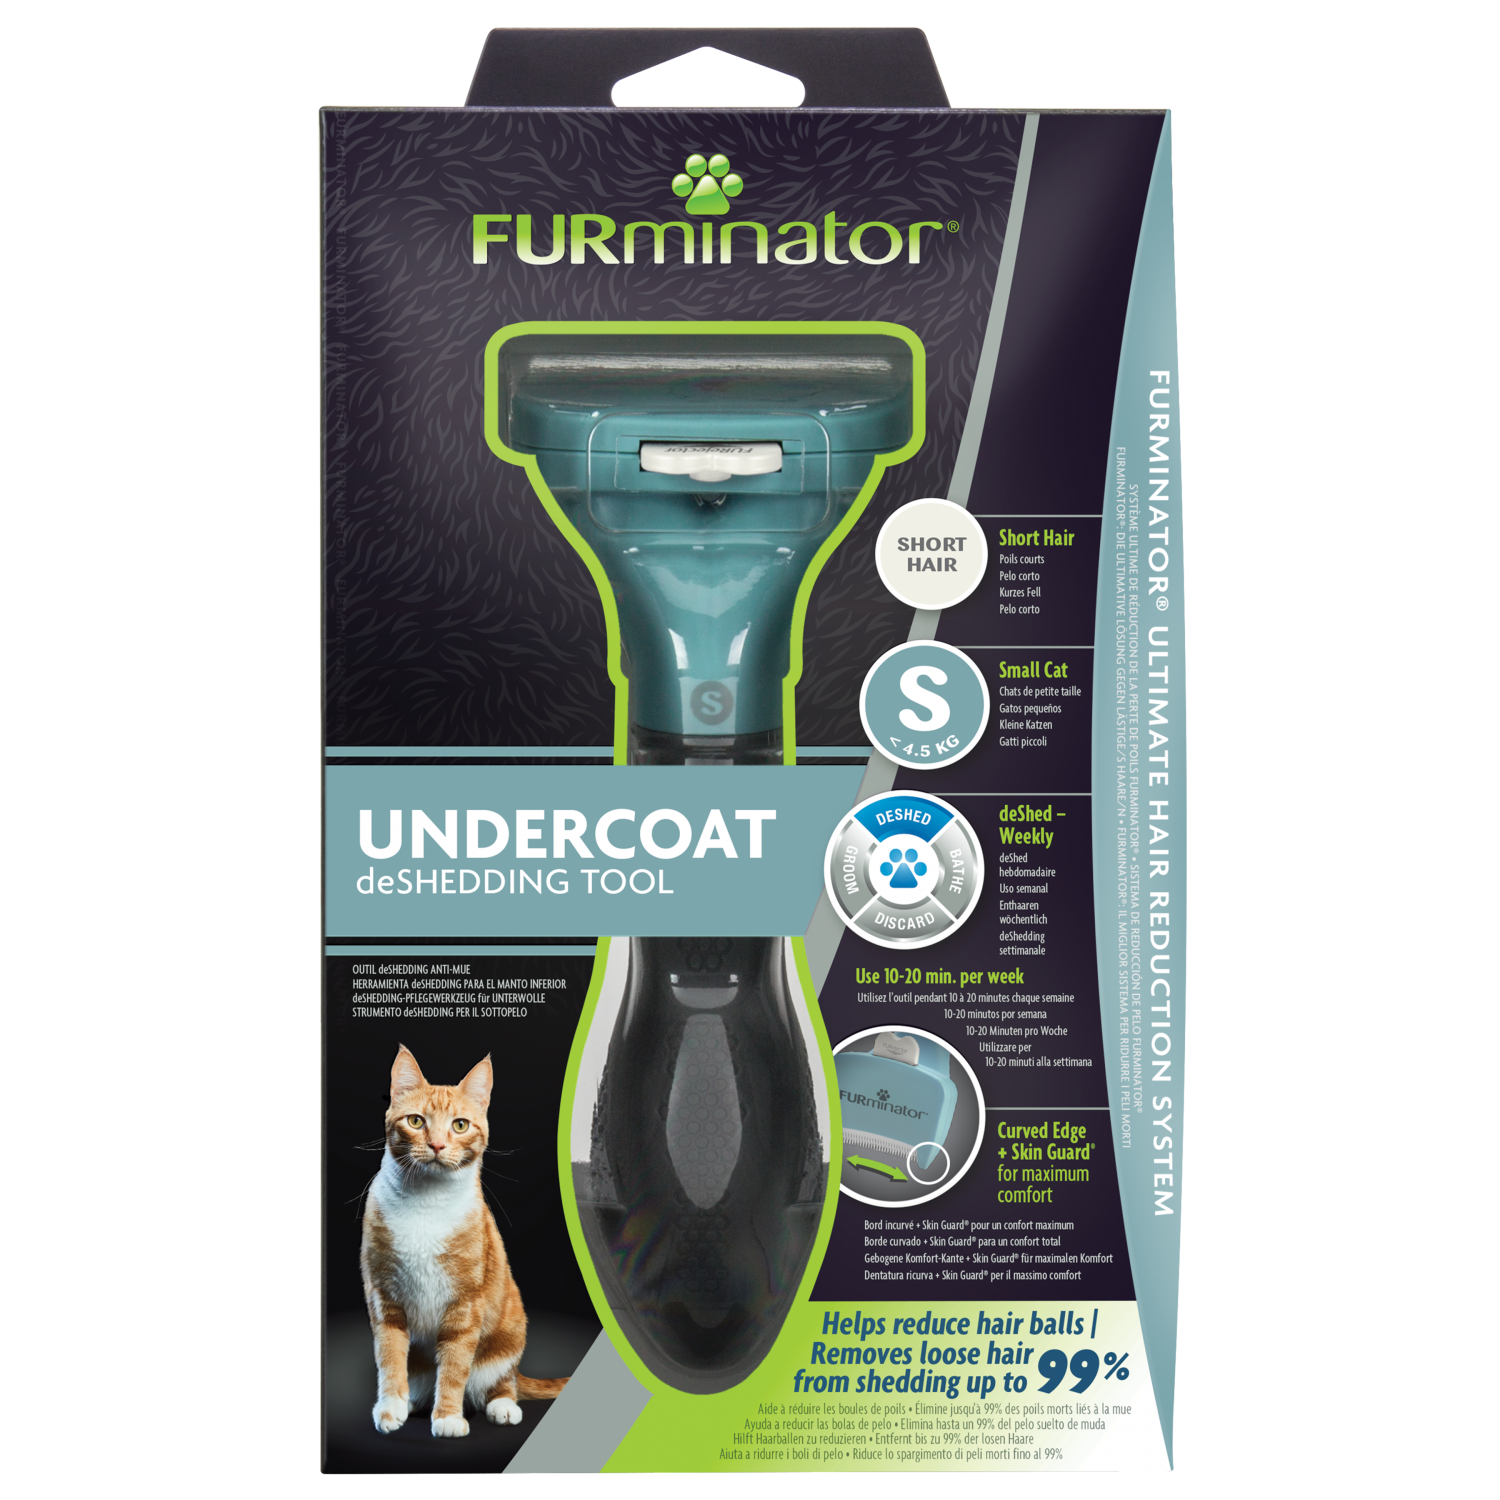 FURminator Undercoat deShedding Tool Small Cat Short Hair